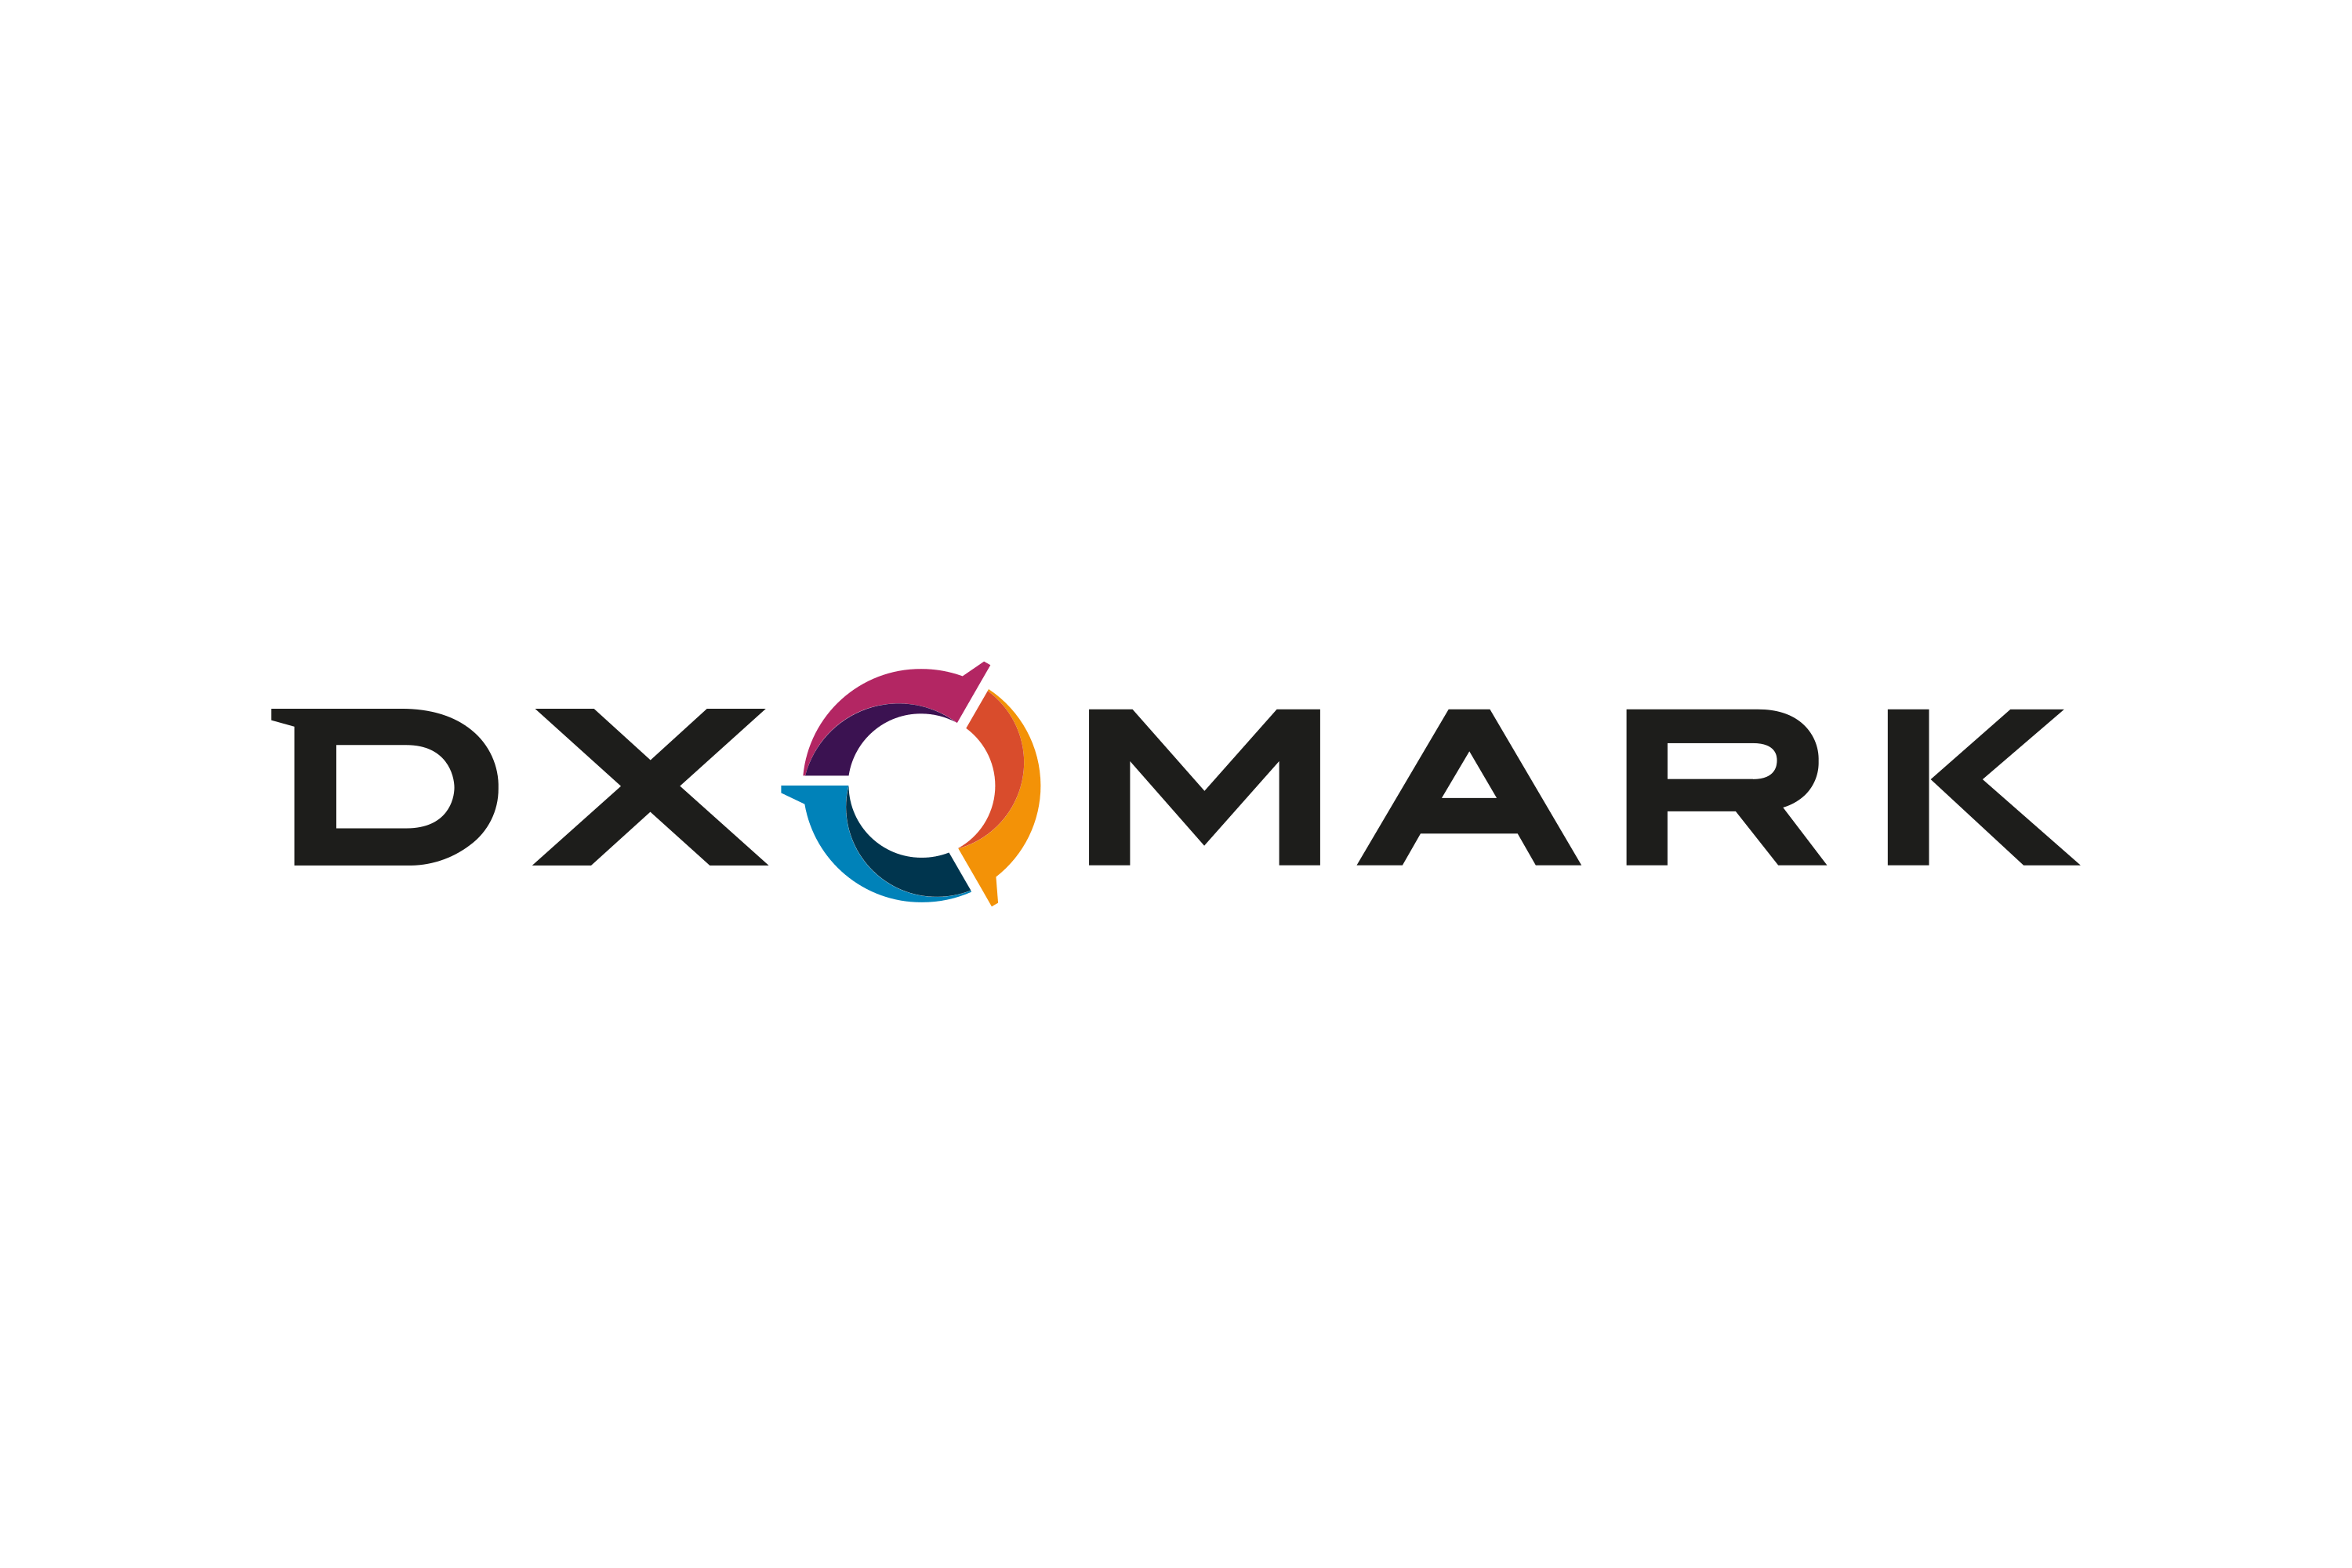 DXOMARK лого. DXOMARK logo. Display DXOMARK logo. Диксомарк